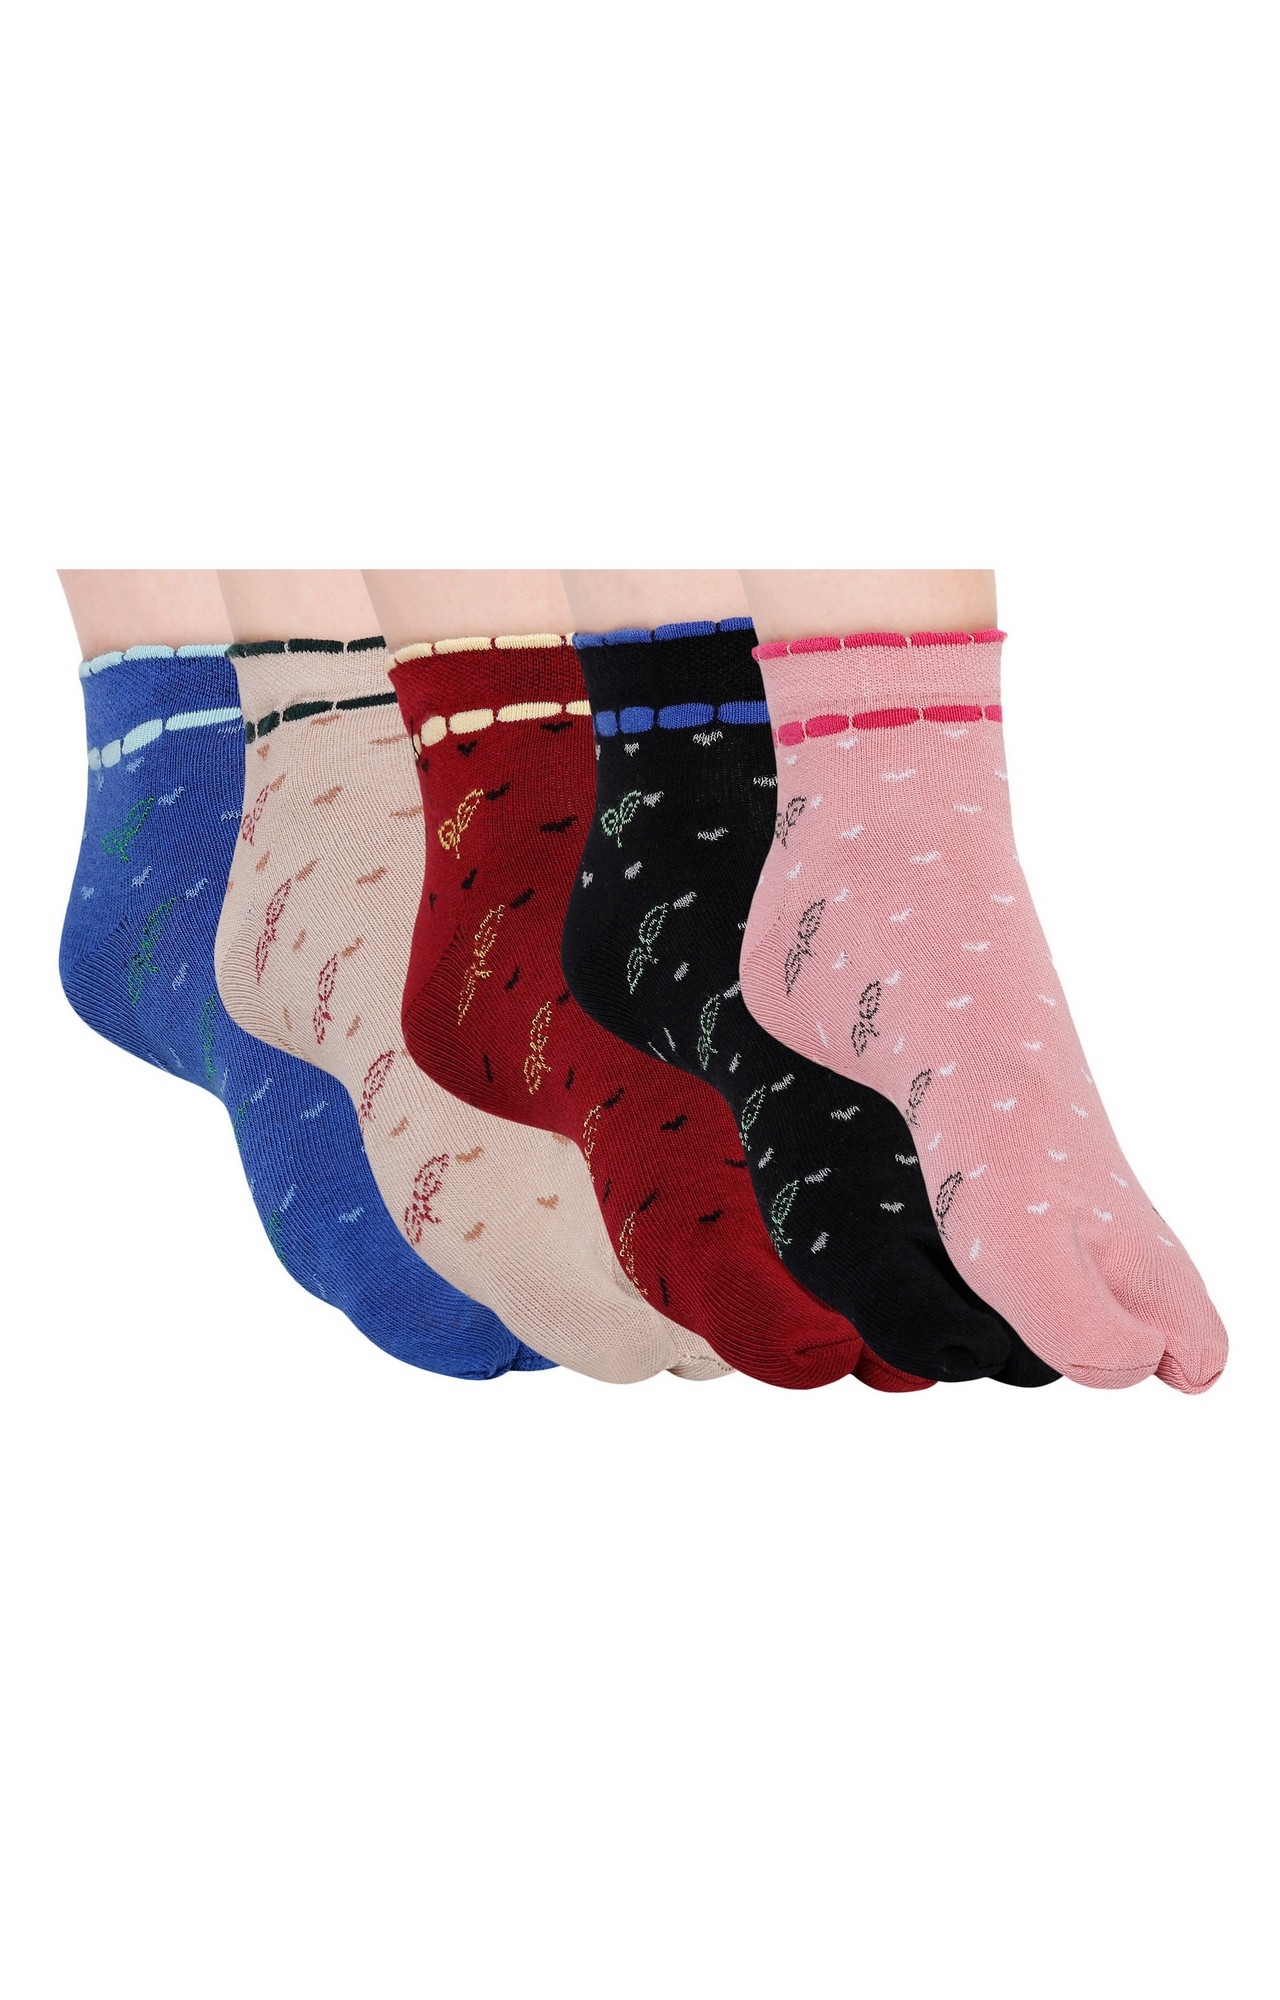 SIDEWOK | SIDEWOK Women Cotton Multicolour Socks - Pack of 5